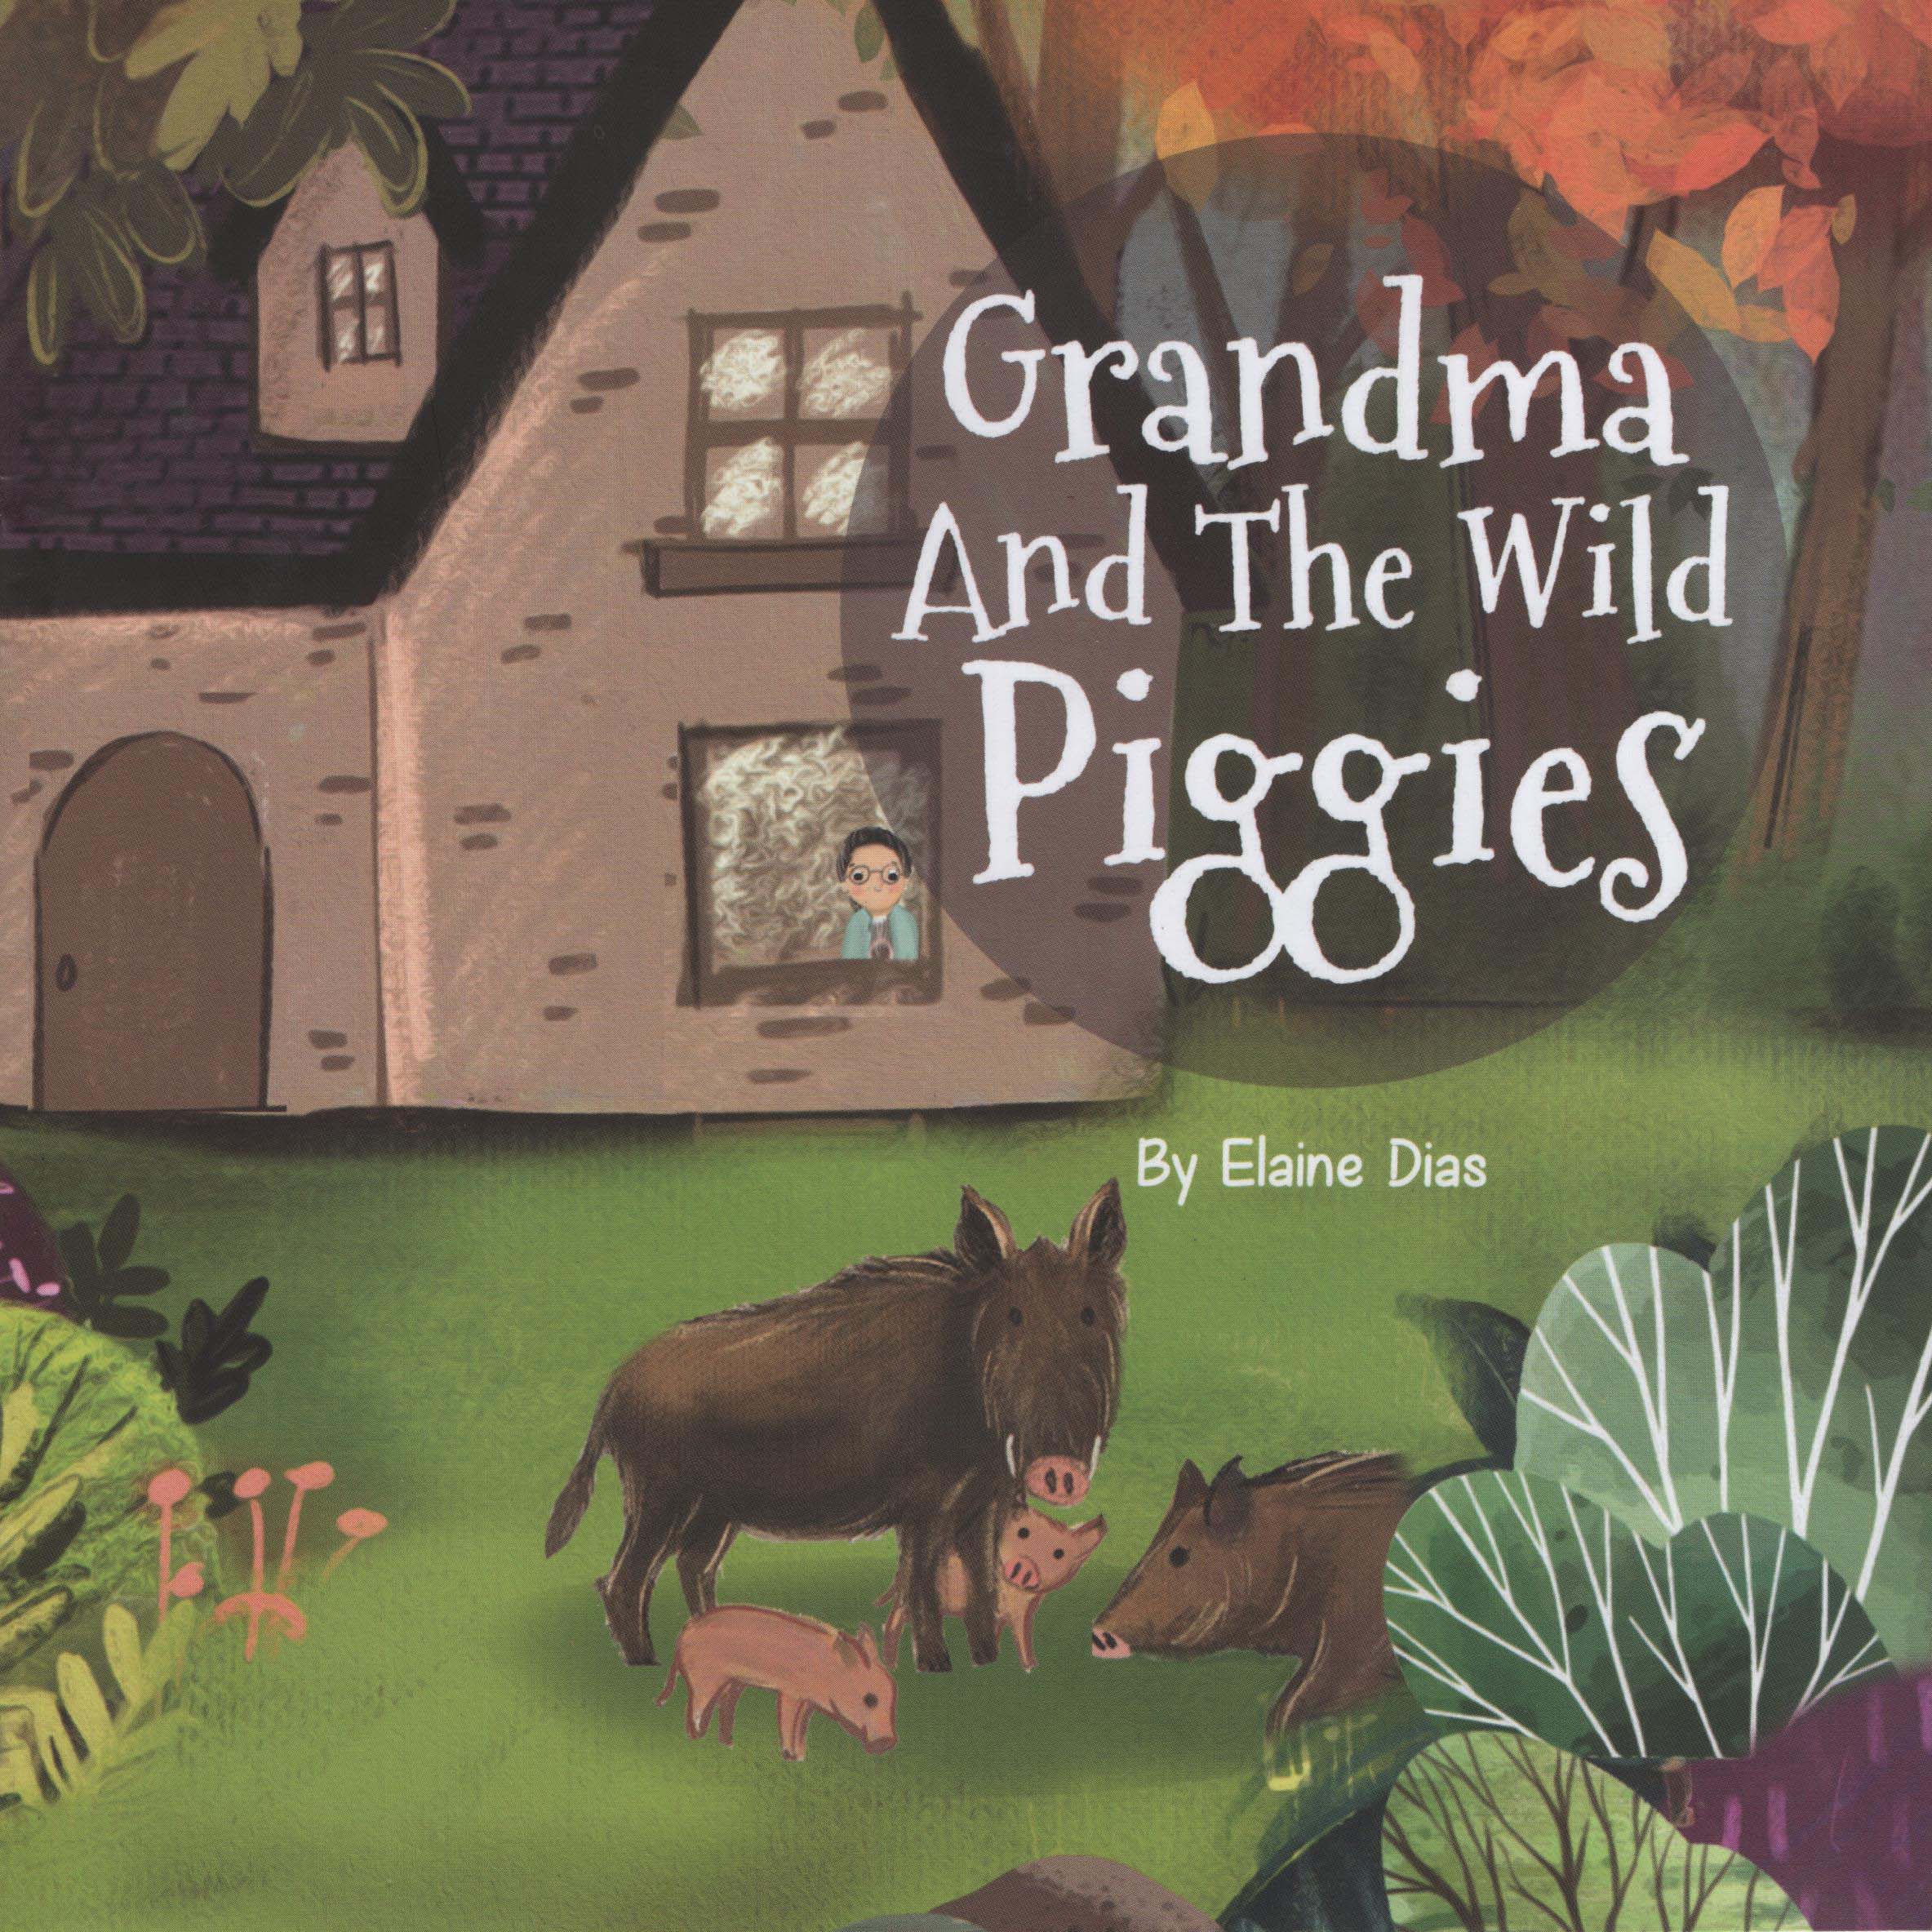 Grandma and The Wild Piggies